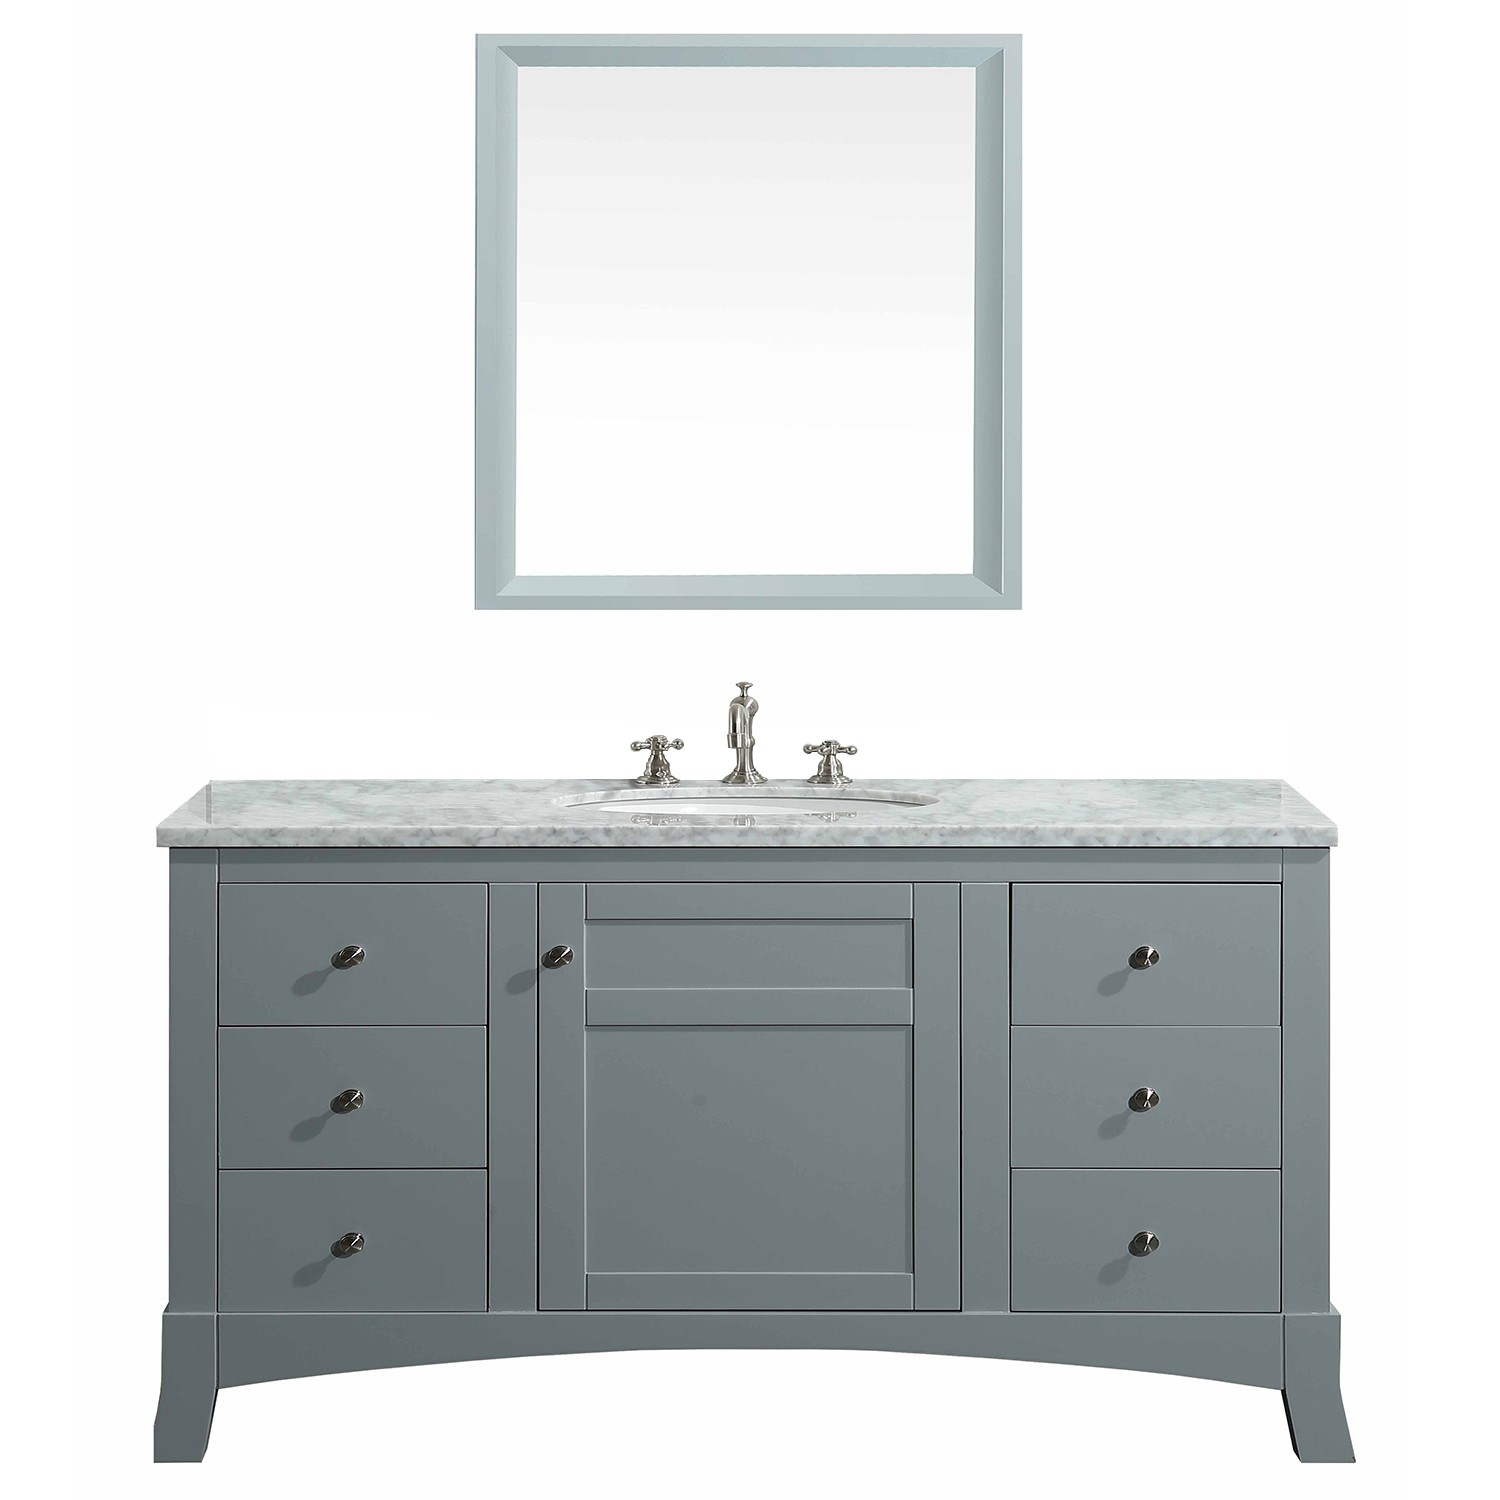 Eviva New York 42 Grey Bathroom Vanity, 42 Inch Bathroom Vanity With Top